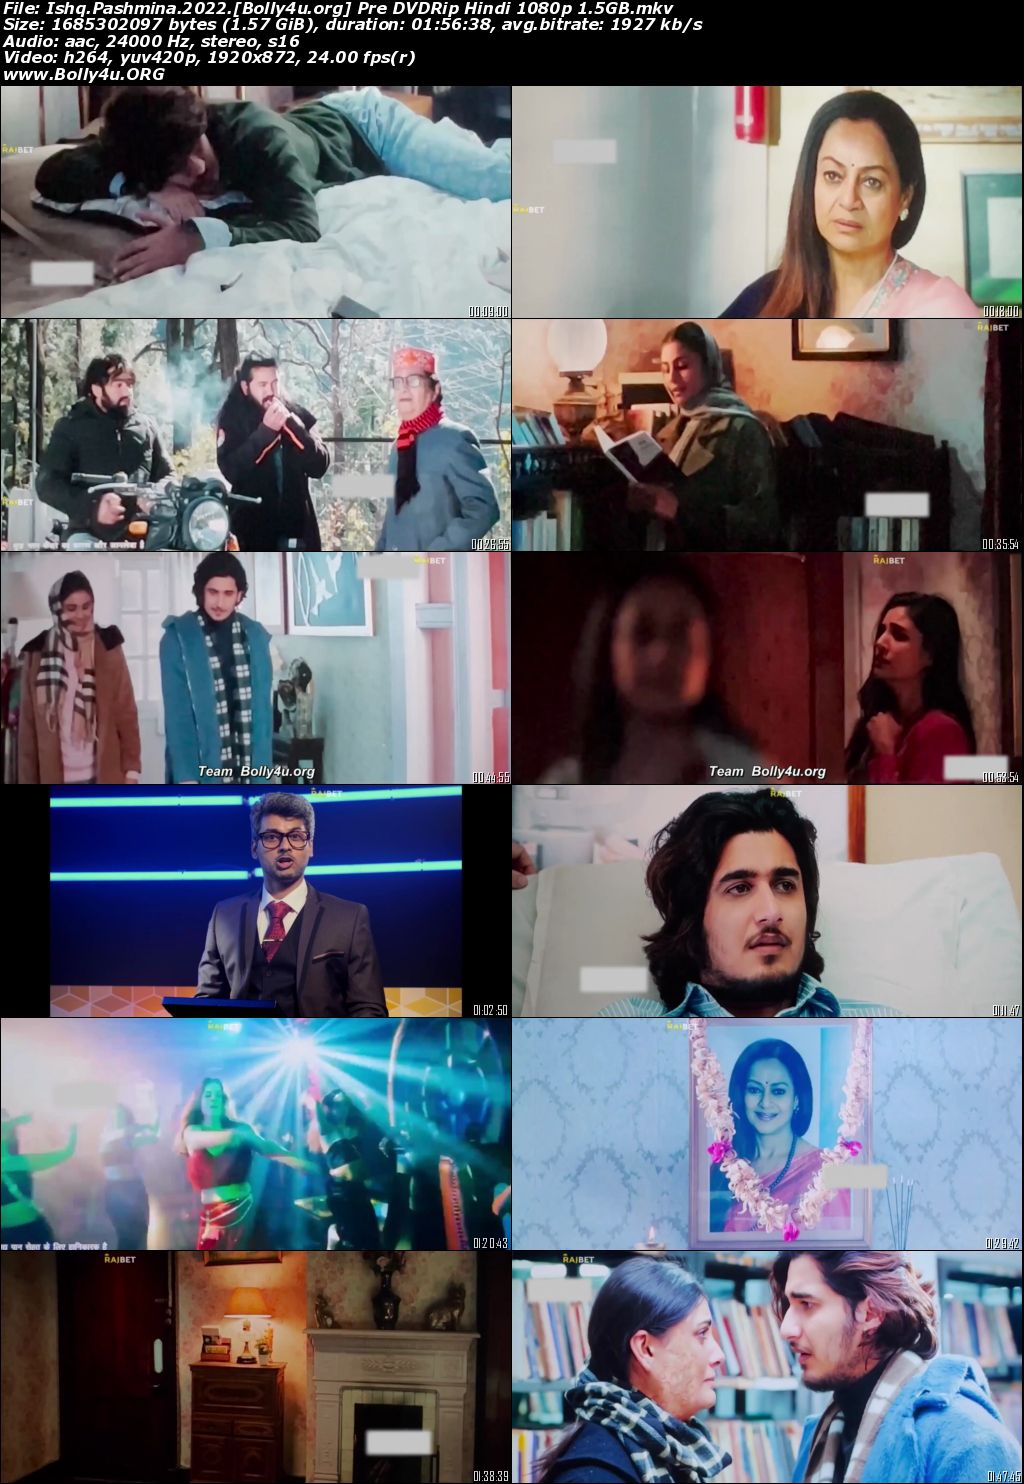 Ishq Pashmina 2022 Pre DVDRip Hindi Full Movie Download 1080p 720p 480p